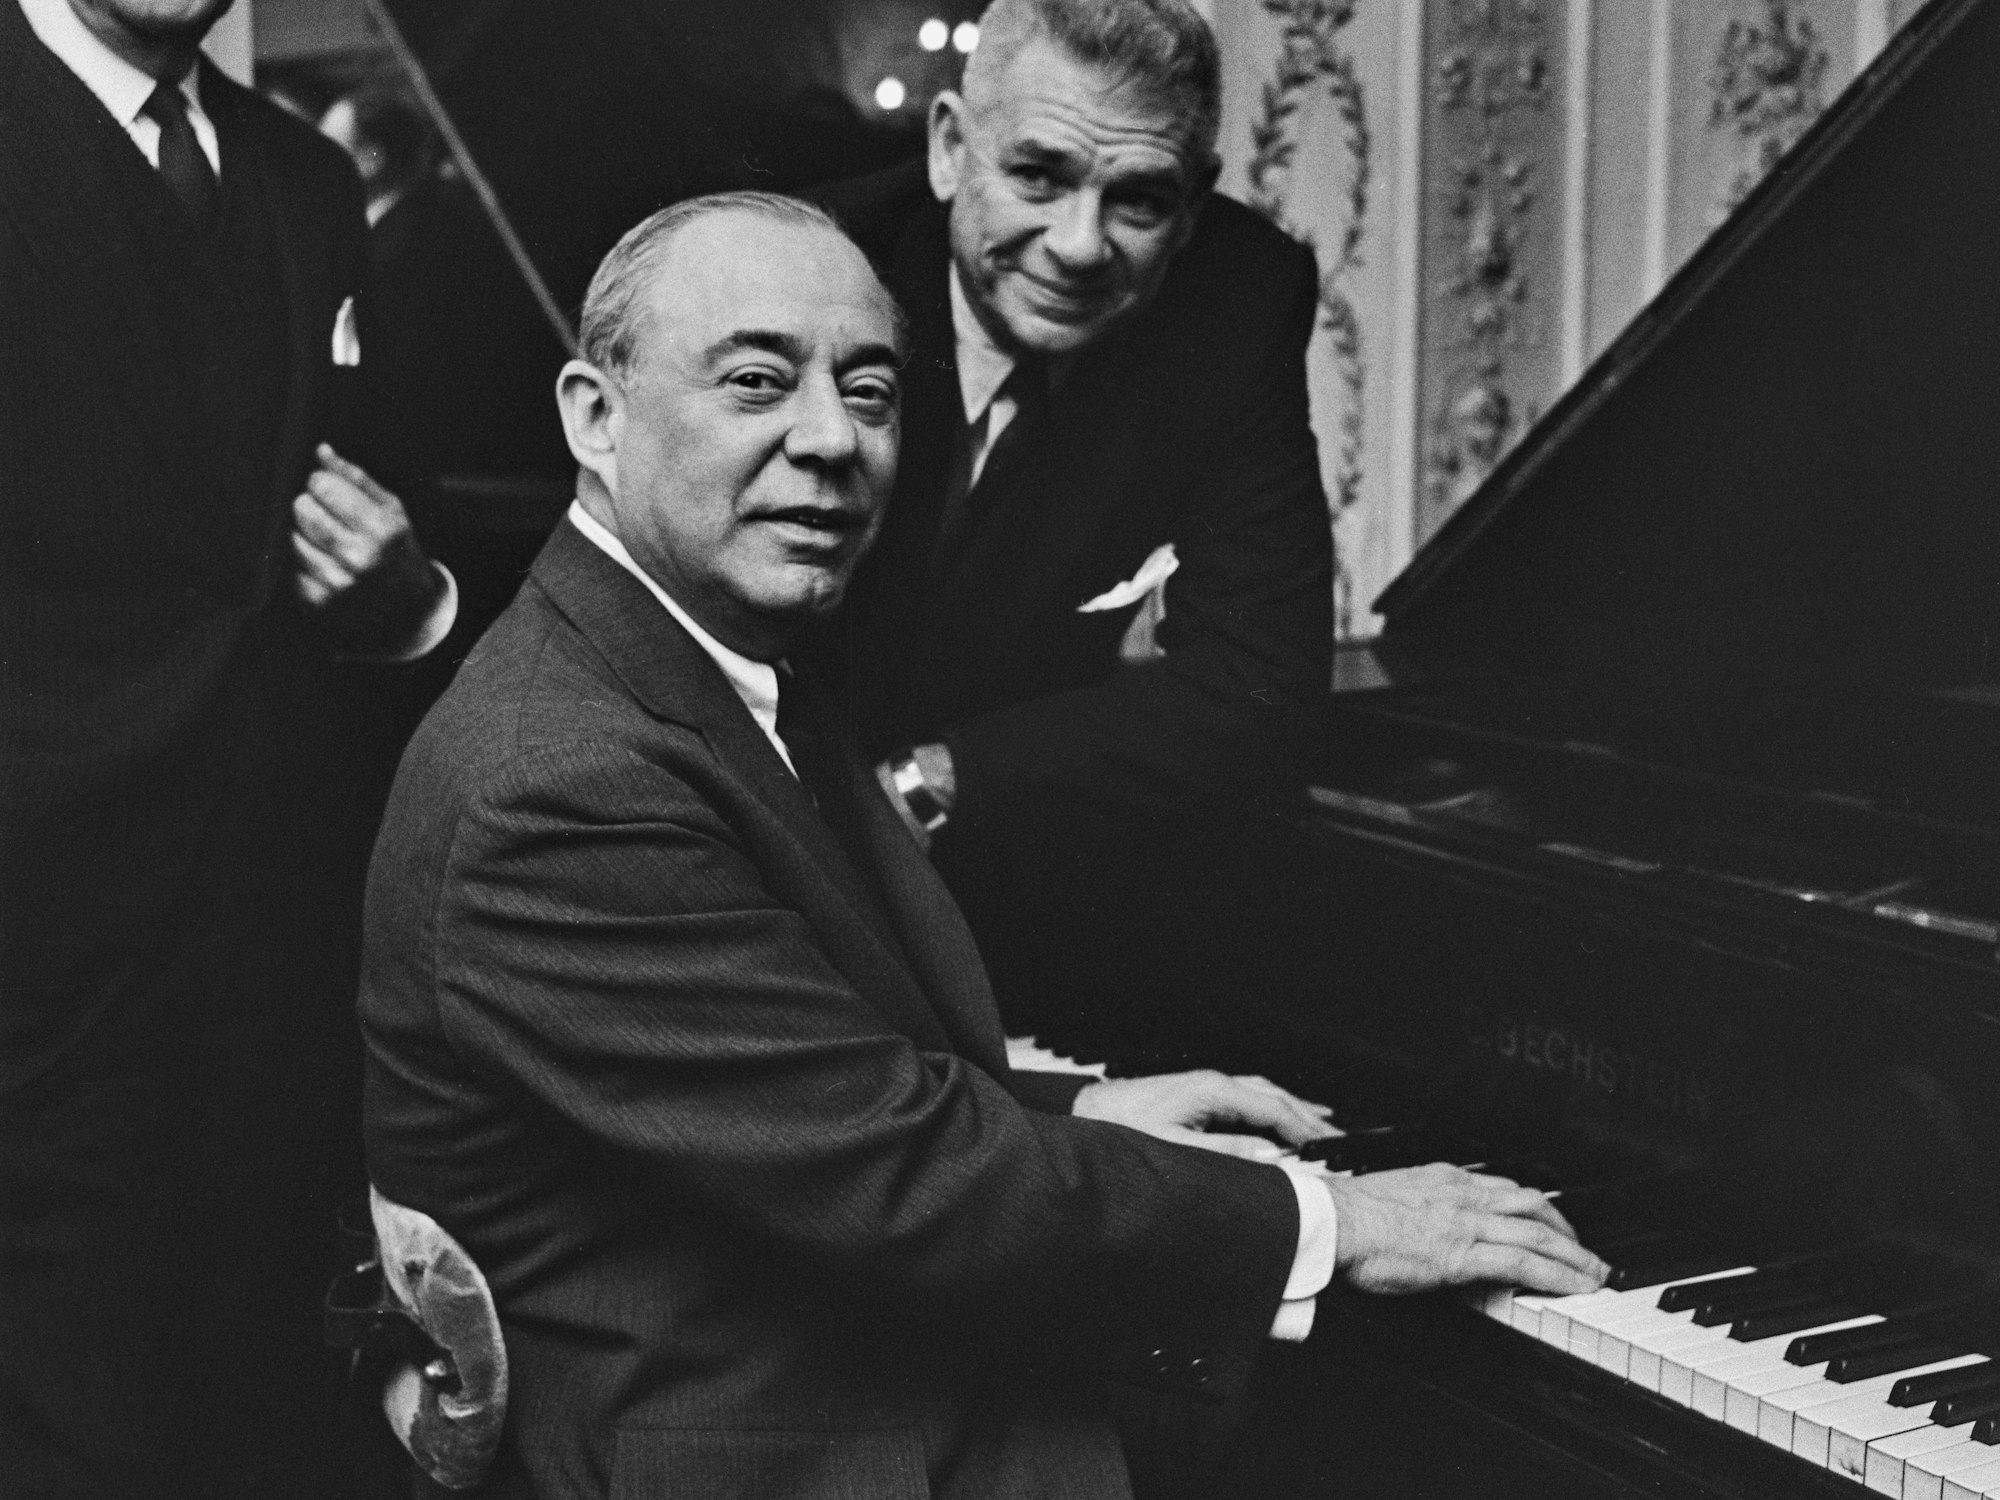 Richard Rodgers am Piano, neben ihm Oscar Hammerstein II.